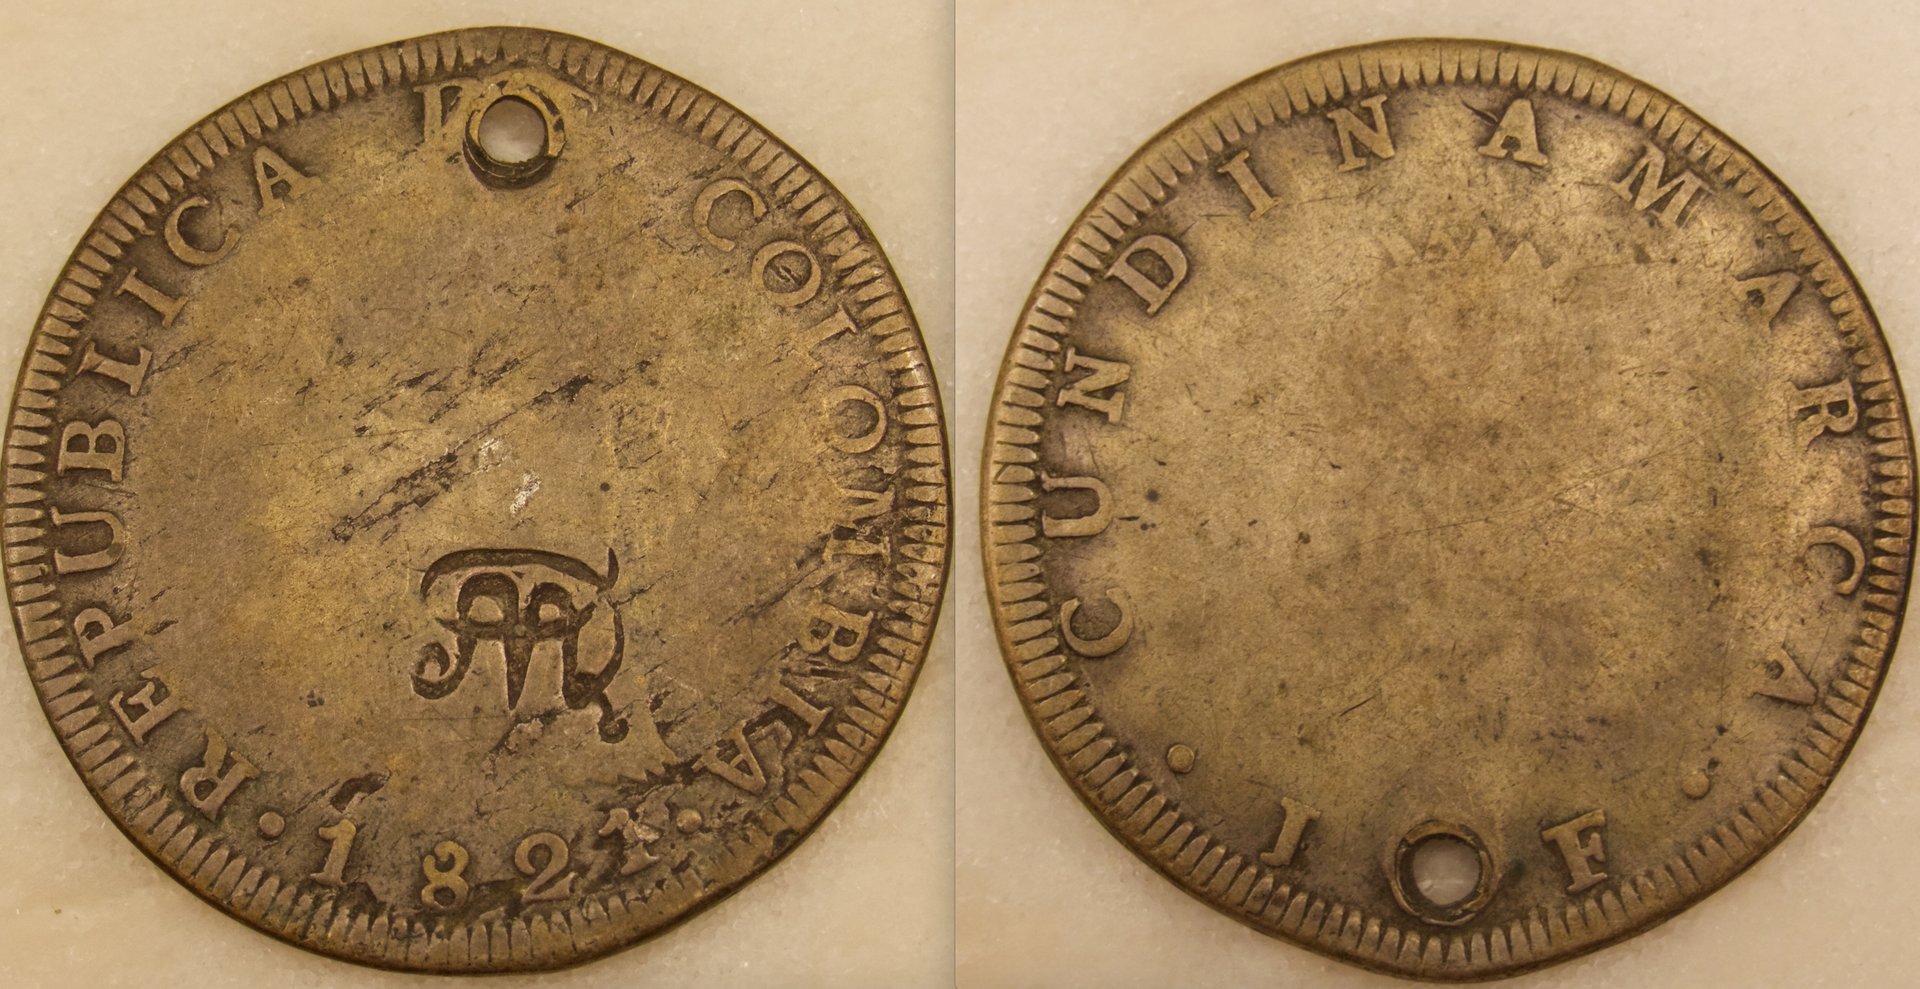 Colombia 1821 8 reales MDQ countermark copy.jpeg